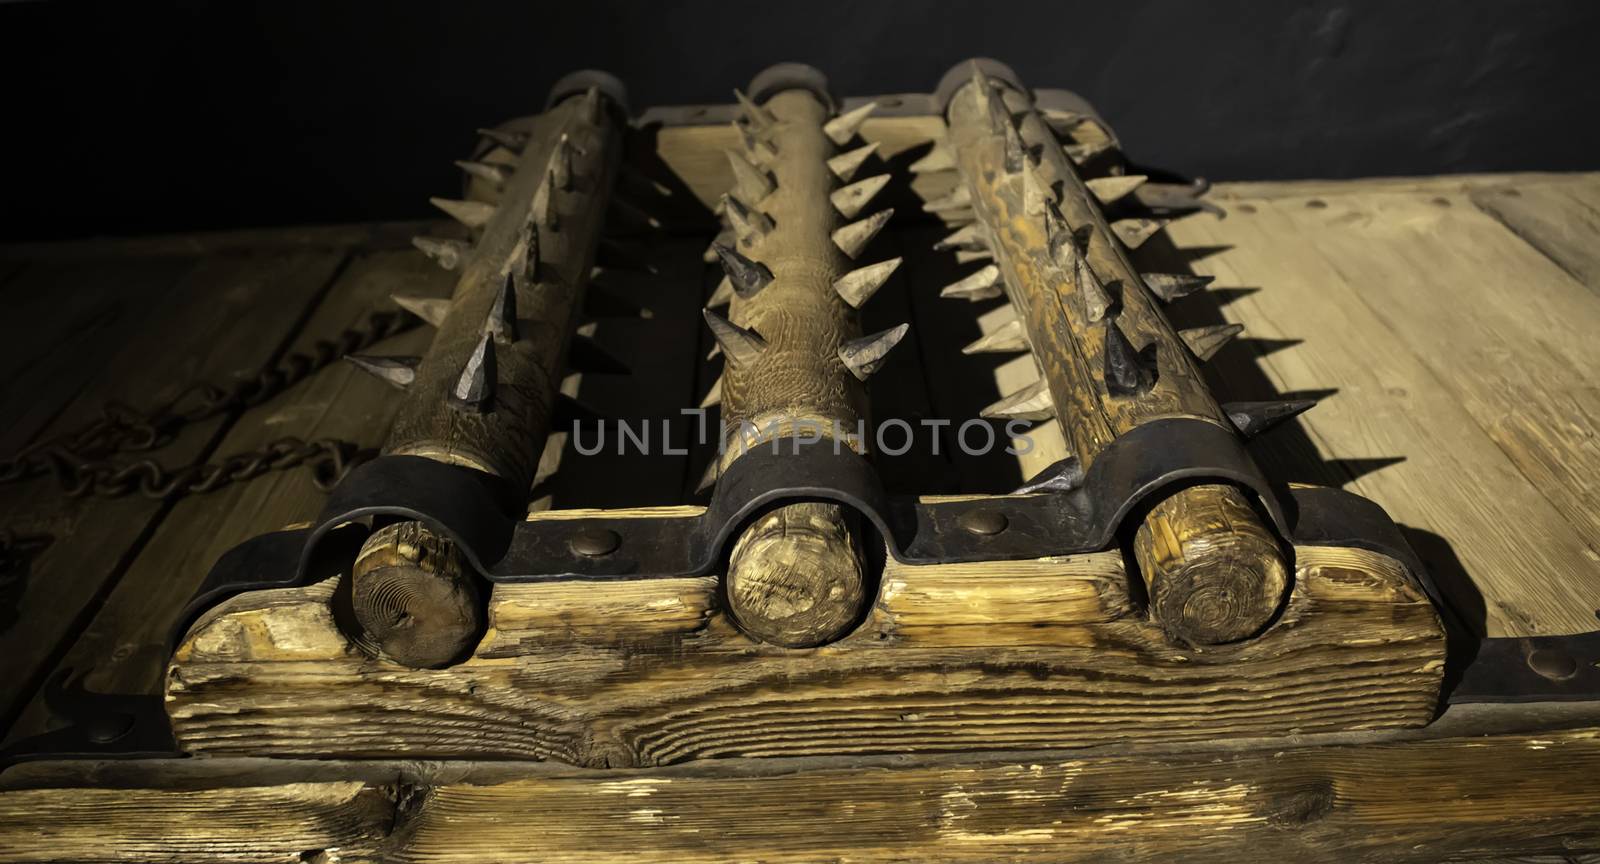 Medieval instrument of torture by celiafoto